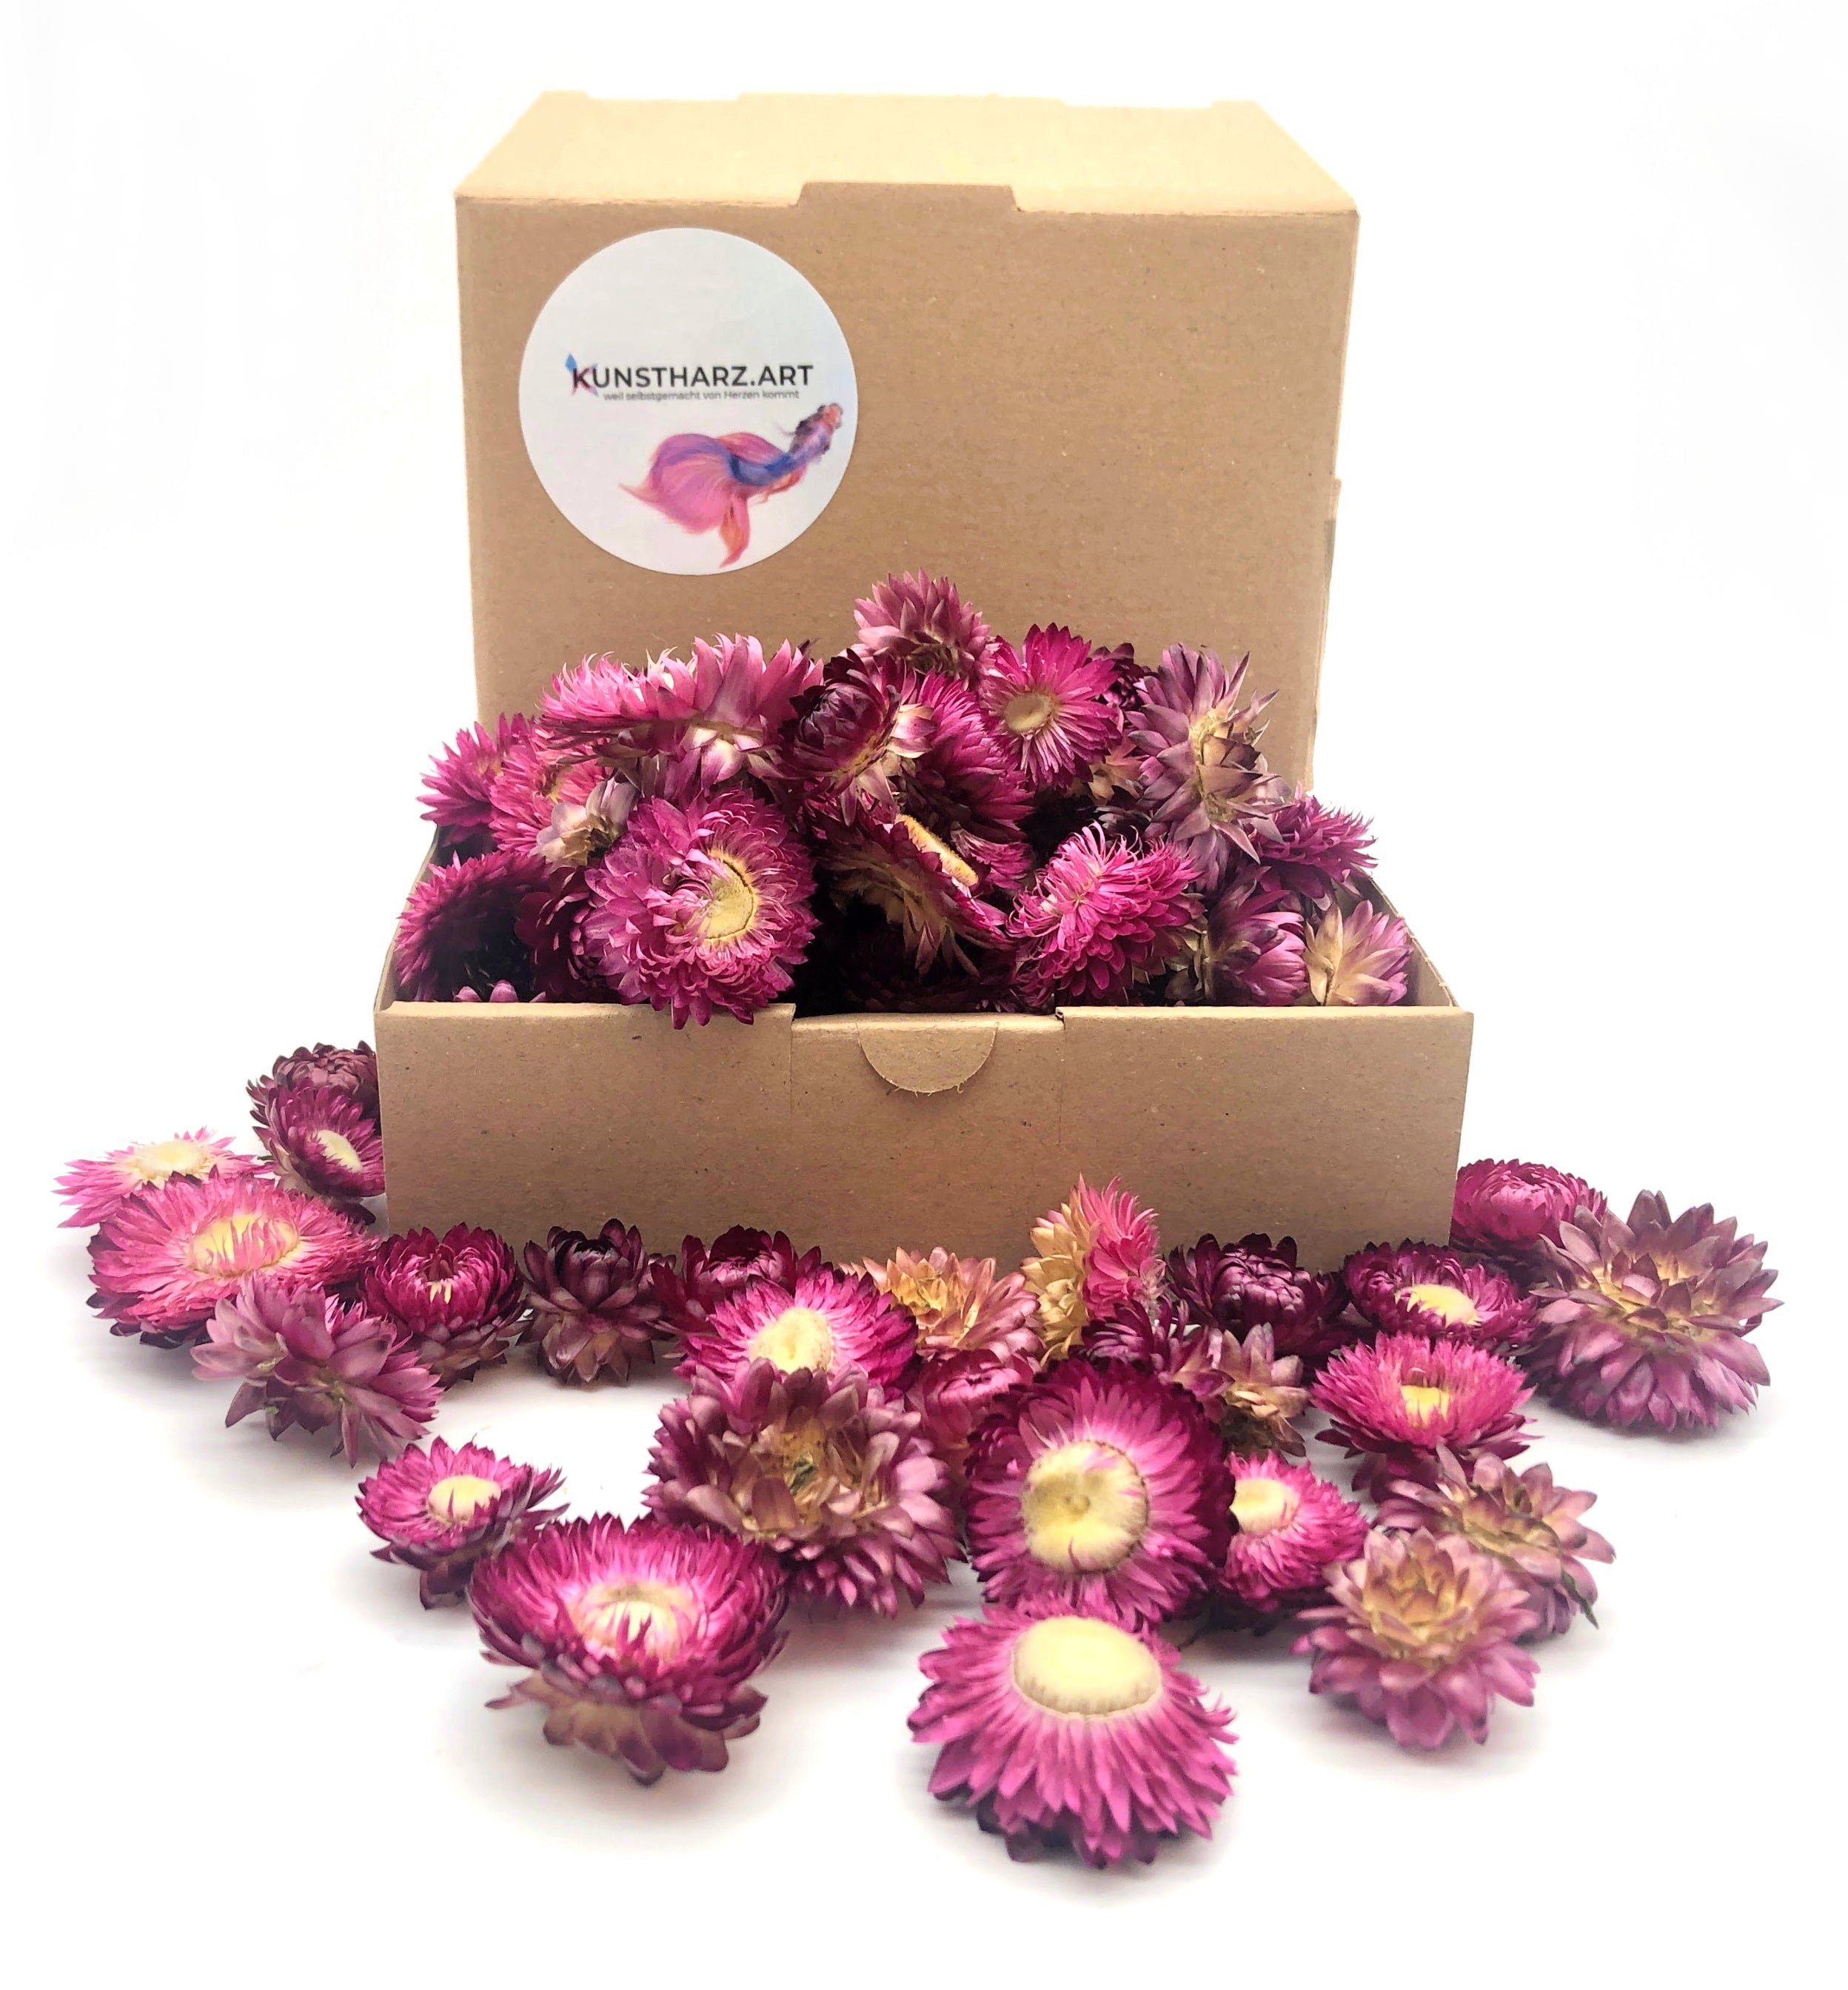 gemischt Strohblumenköpfe sortiert getrocknet: Lila, Kunstharz.Art Trockenblume Helichrysum farblich - oder